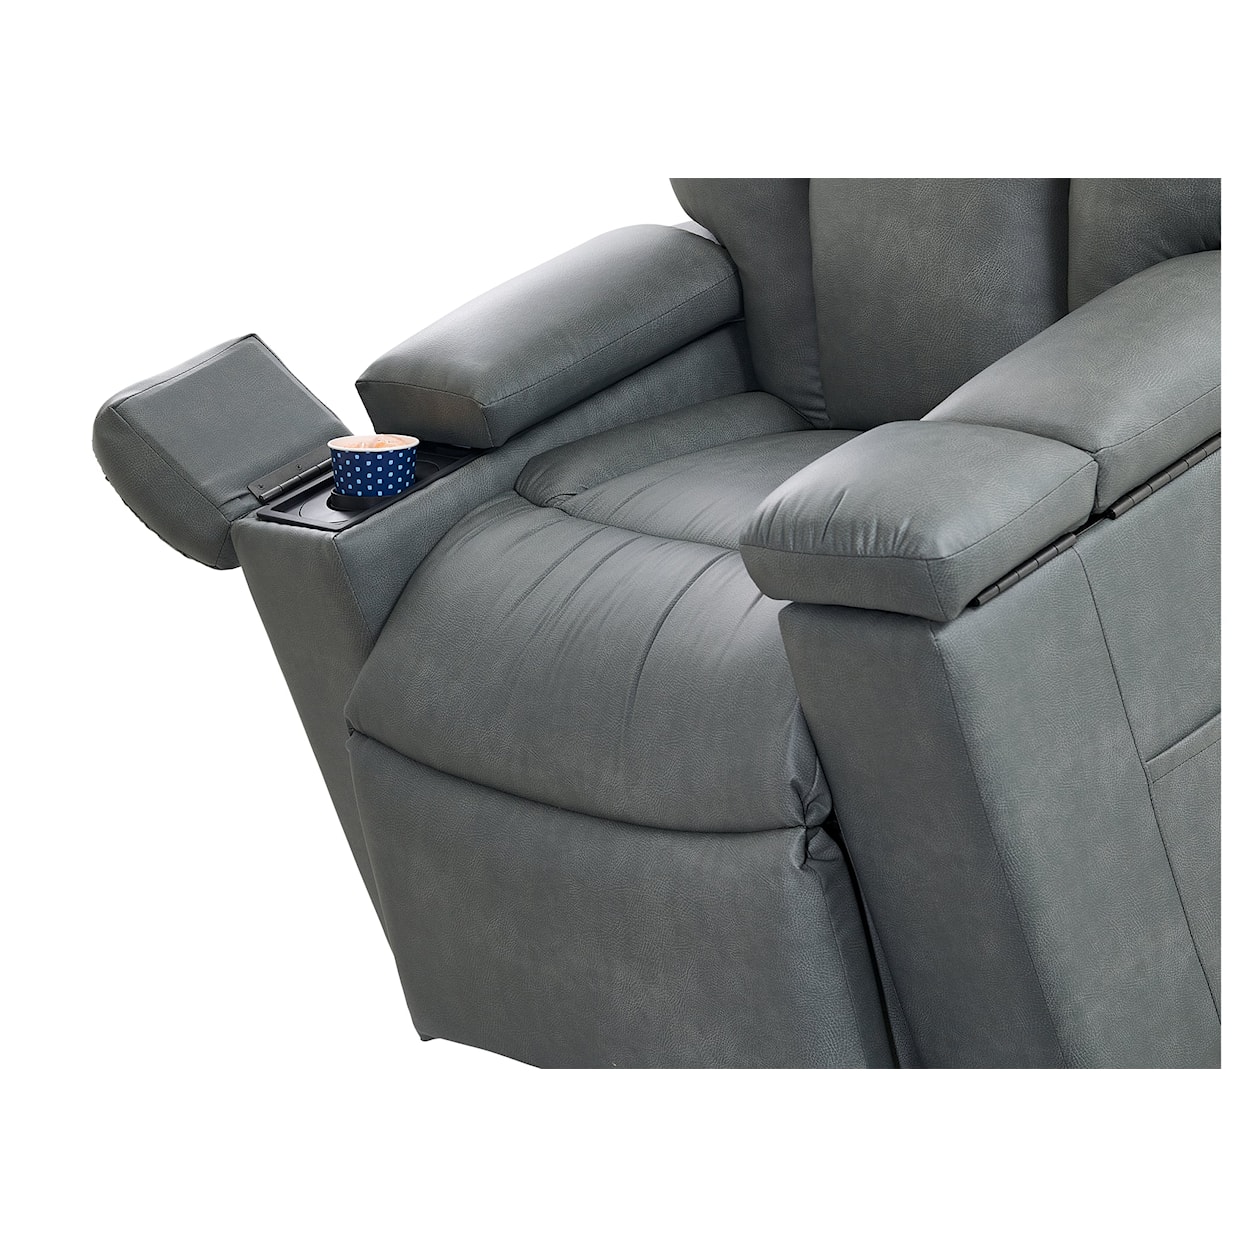 UltraComfort Rigel Lift Chair with Power Headrest & Lumbar